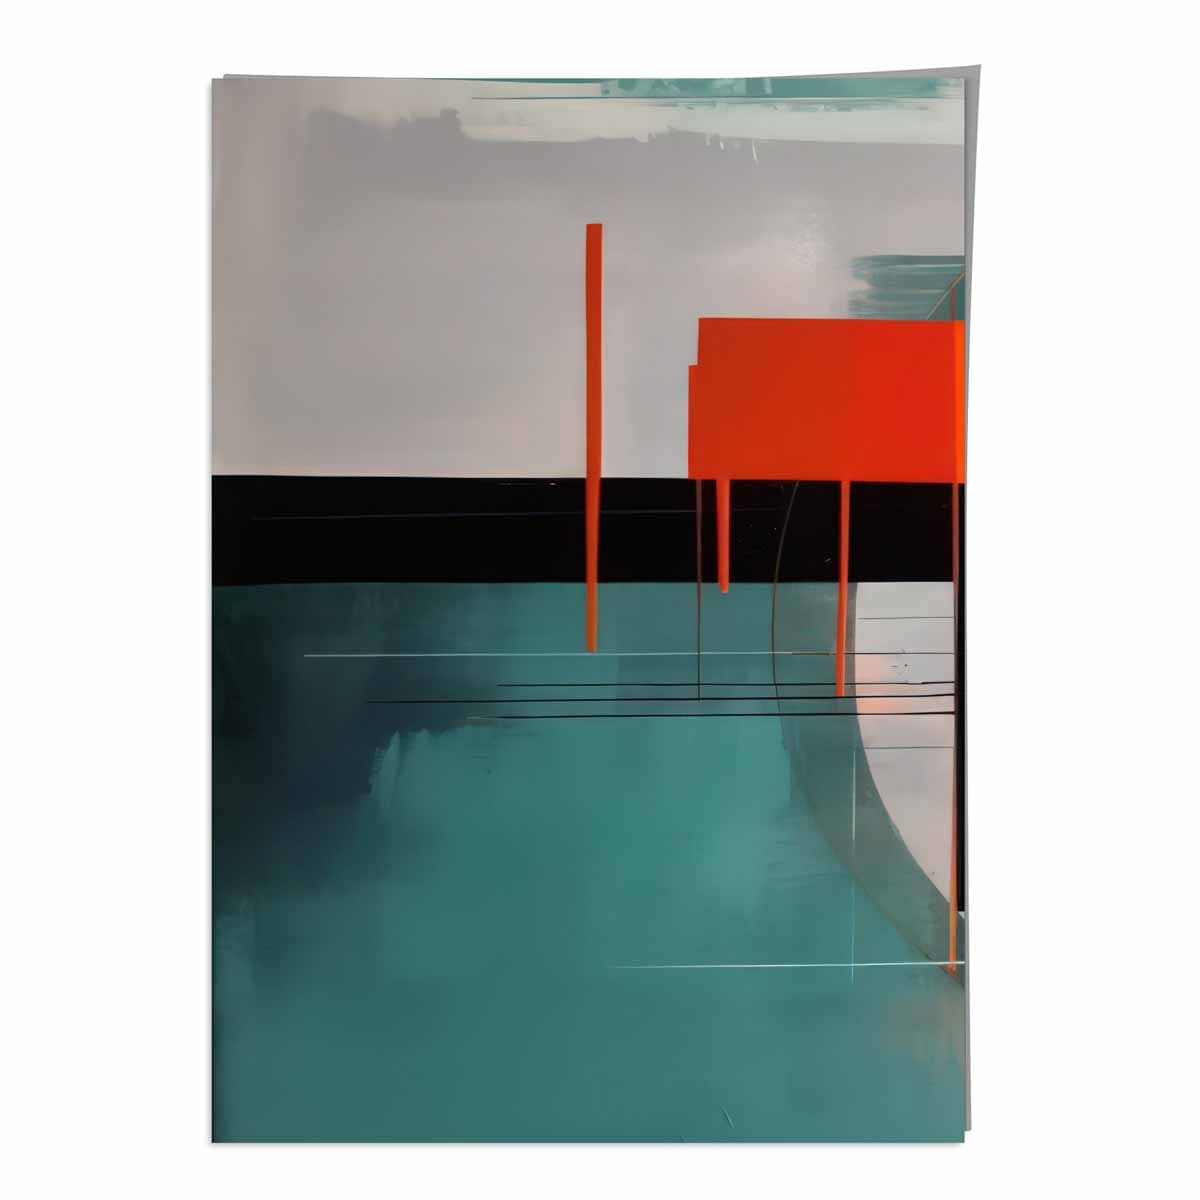 Abstract Shapes Art Print Teal Red and Grey No 2